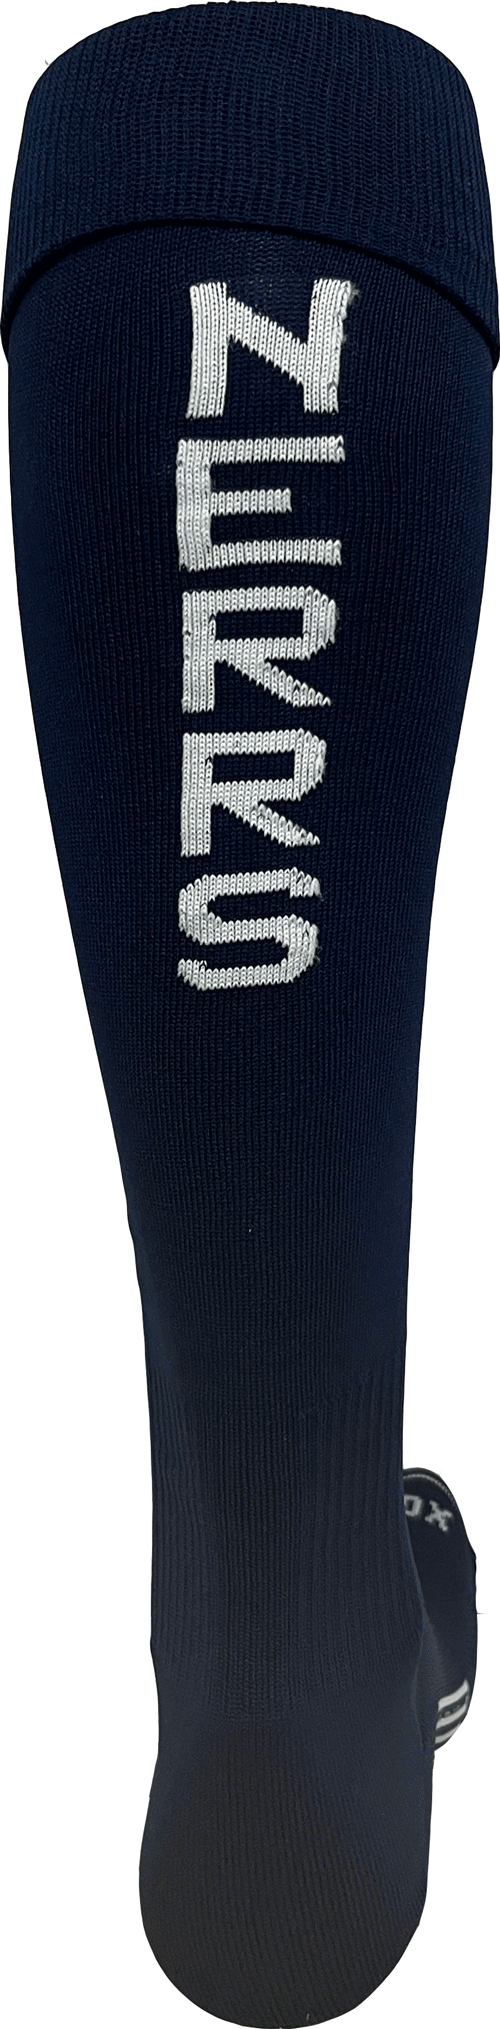 NERRS Custom Sock